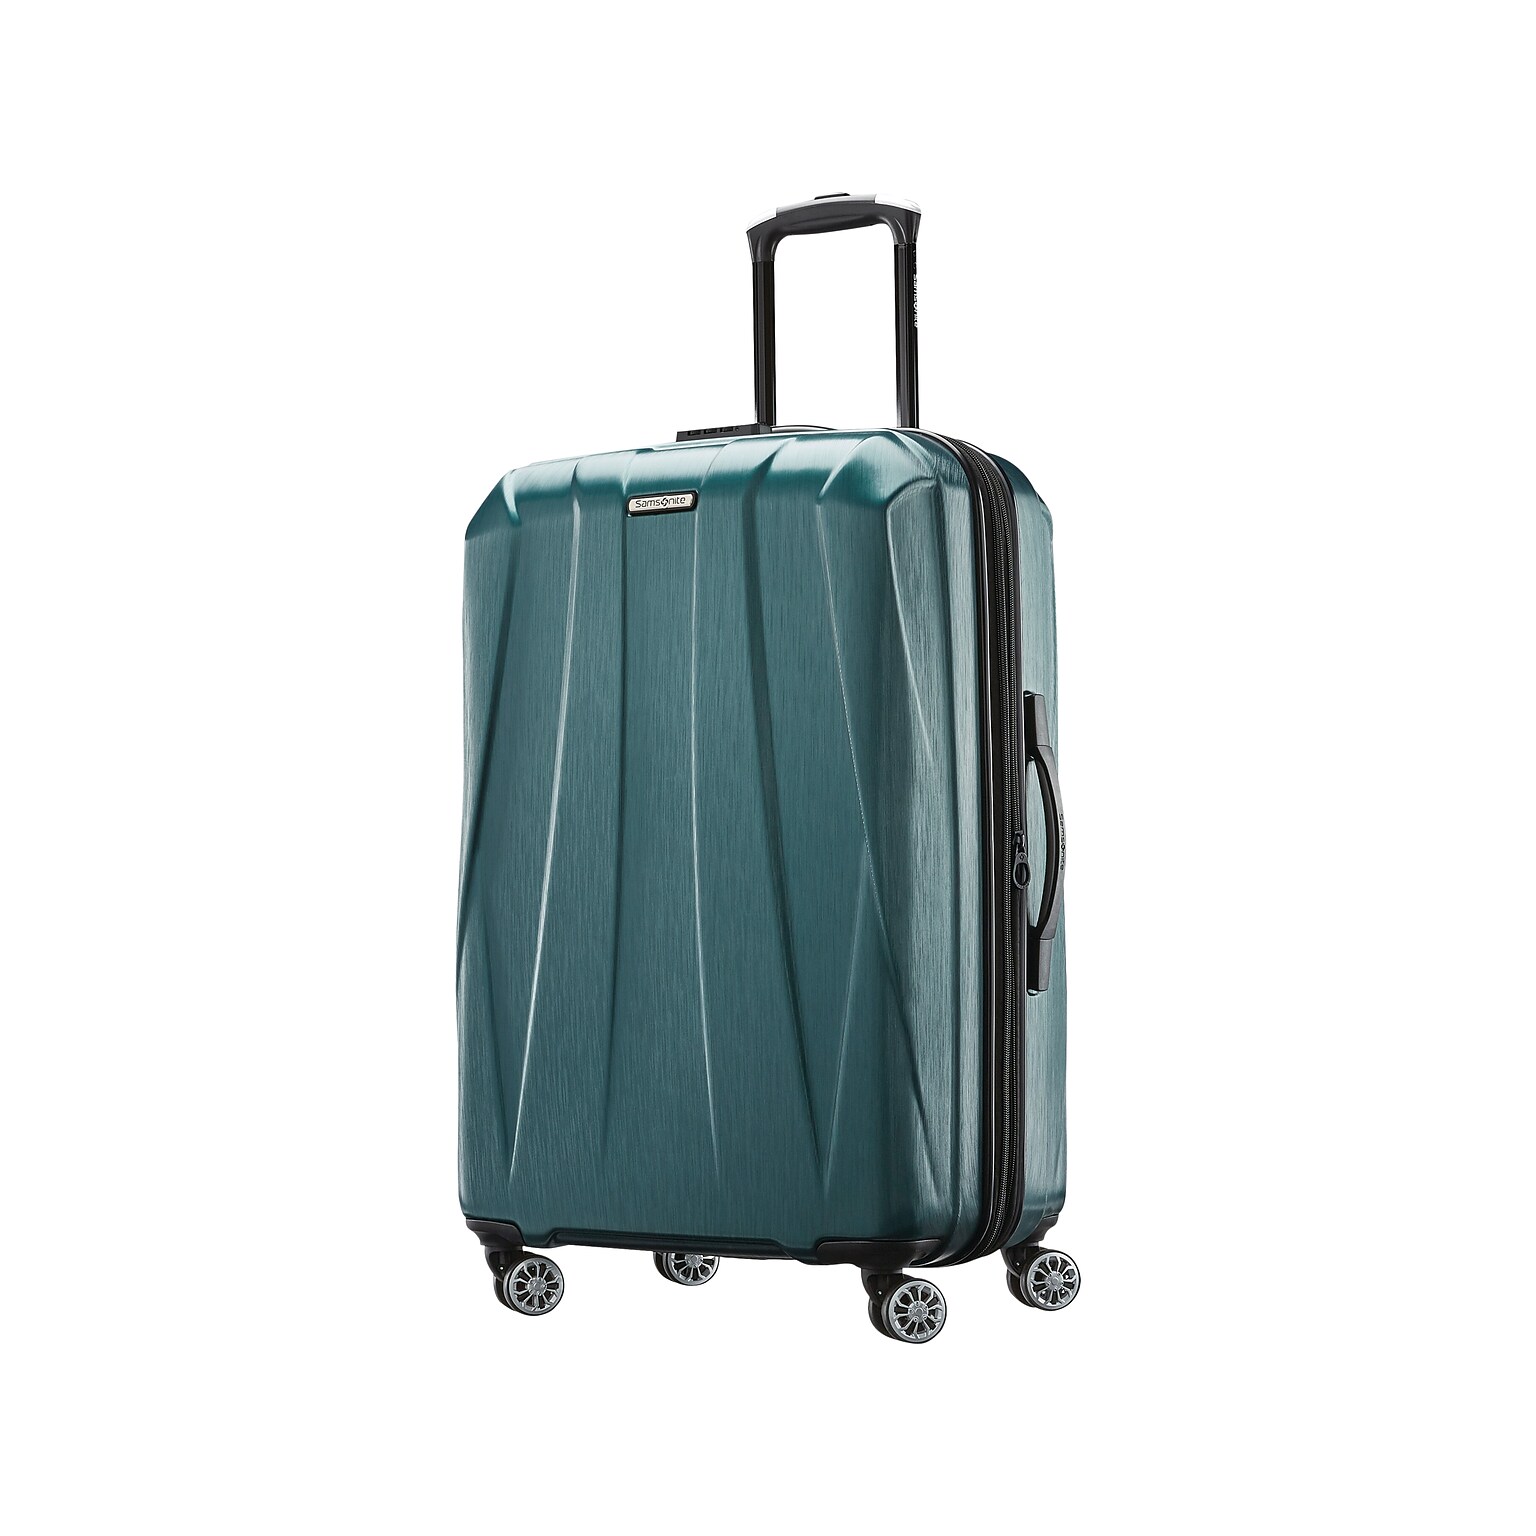 Samsonite Centric 2 Polycarbonate 4-Wheel Spinner Luggage, Emerald Green (133032-1327)